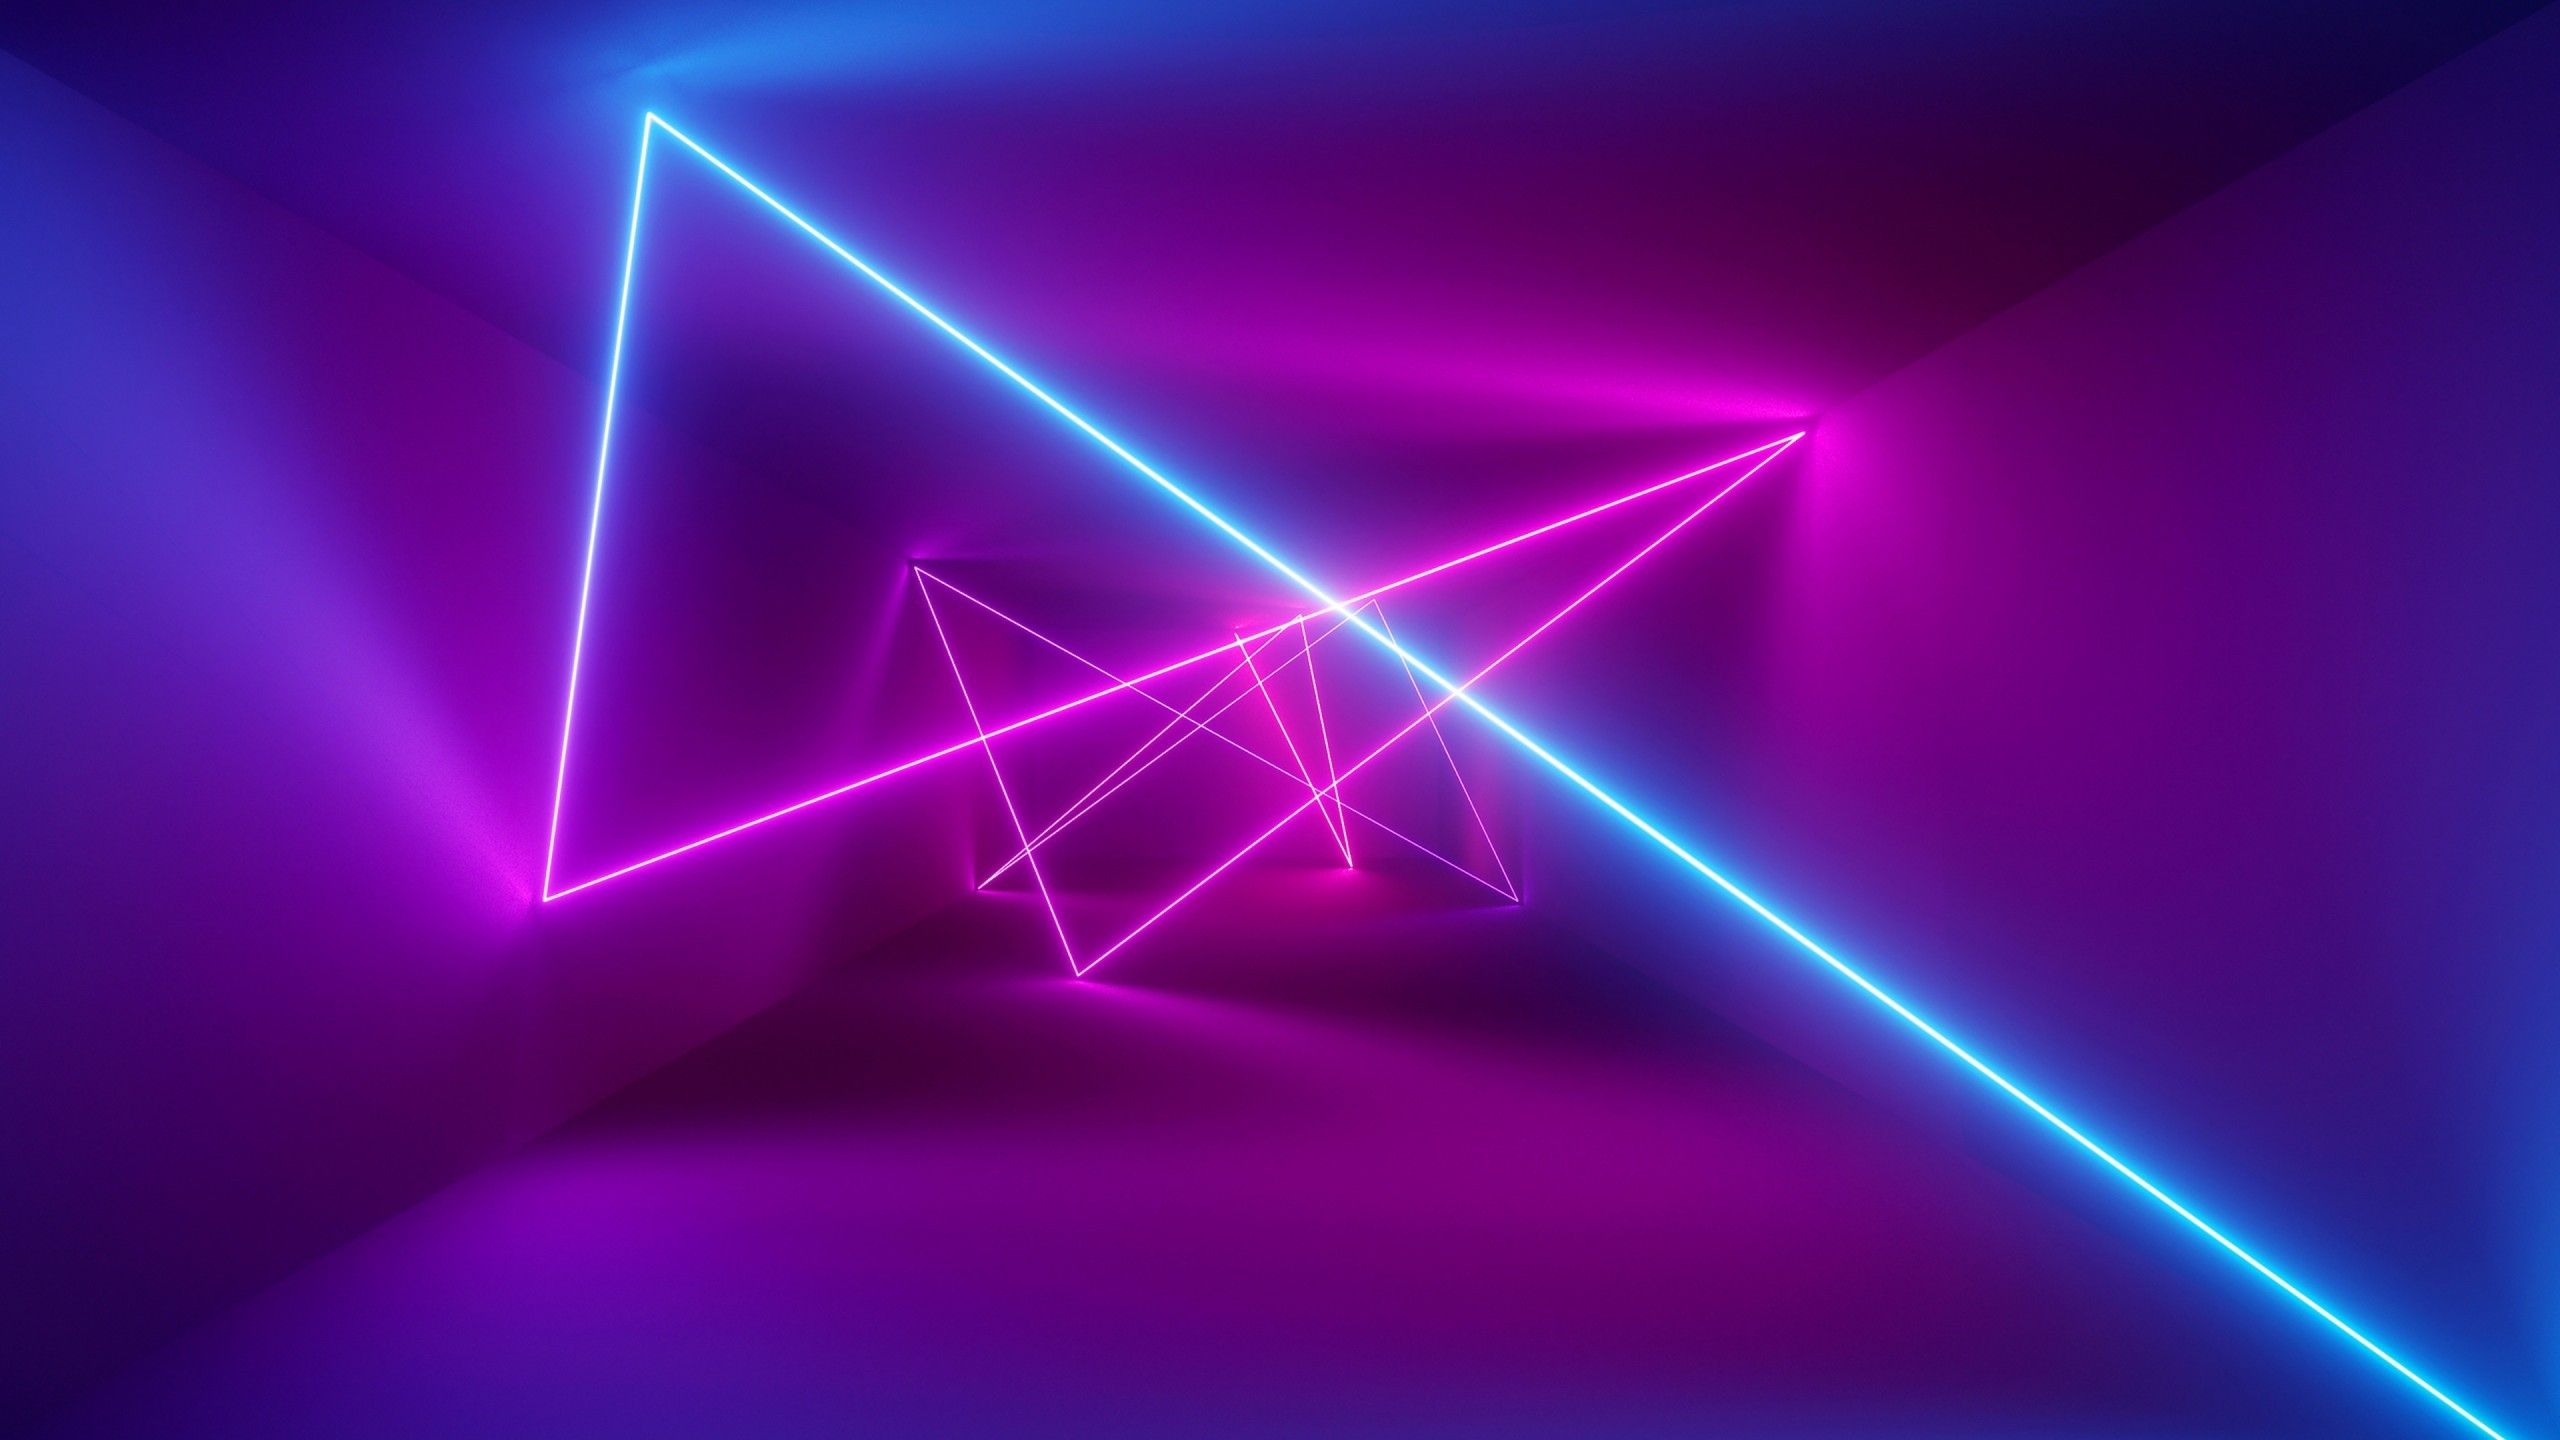 Download 2560x1440 Neon Room, Lines, Laser Lights Wallpaper for iMac 27 inch